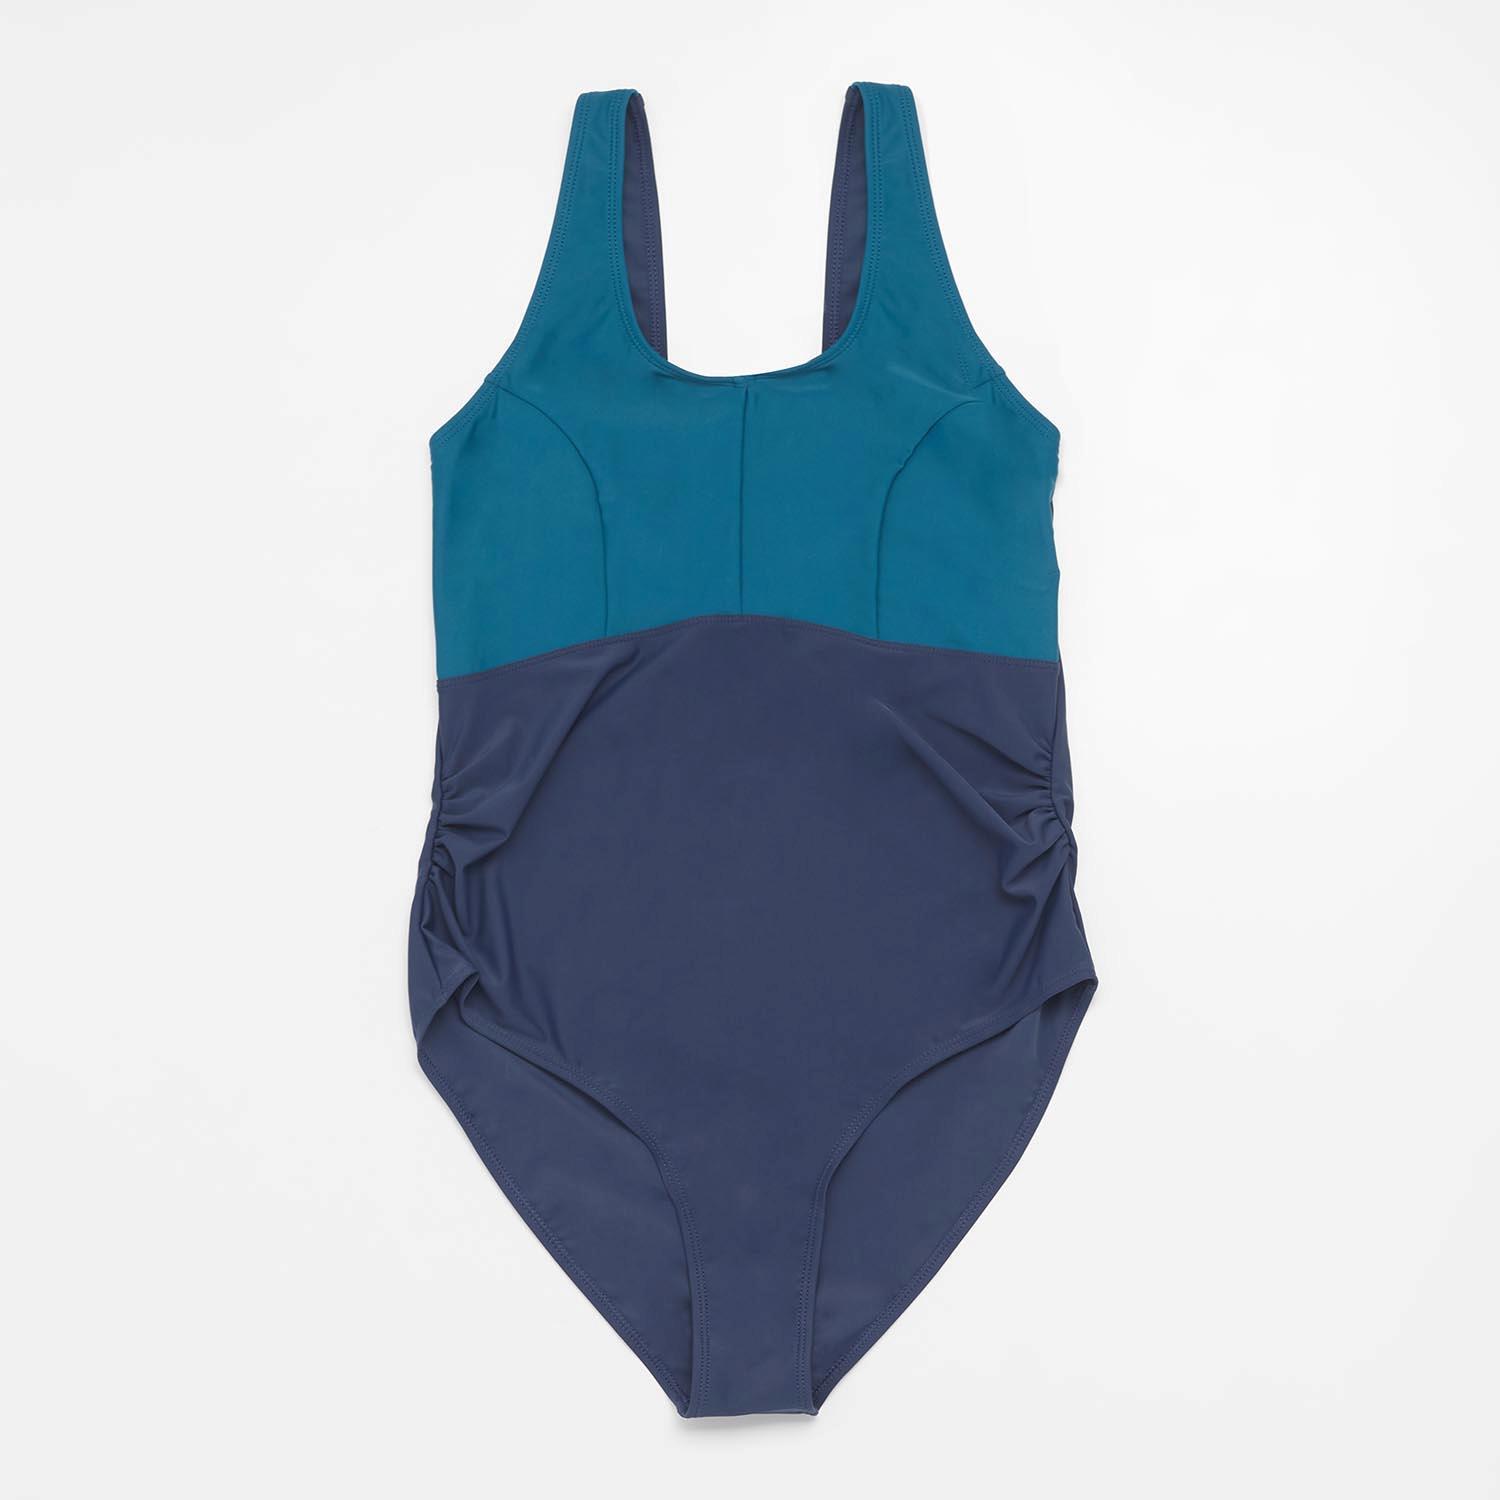 Maillot de bain Natation Ankor - Bleu Marine - maillot de bain femme enceinte sports taille XL